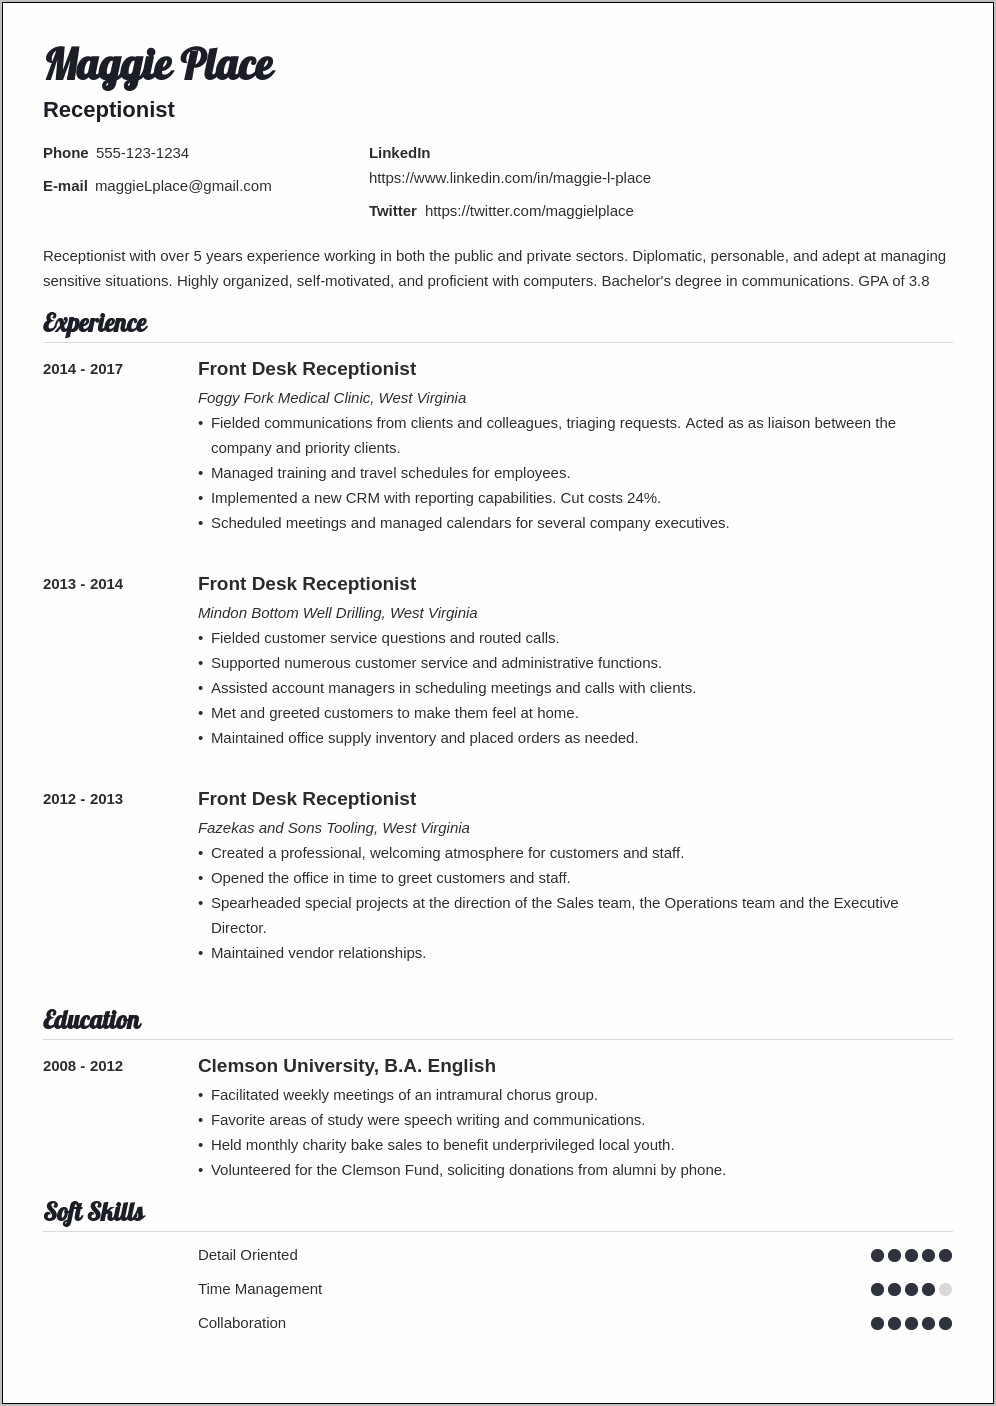 Resume Objectives For Front Desk Receptionist